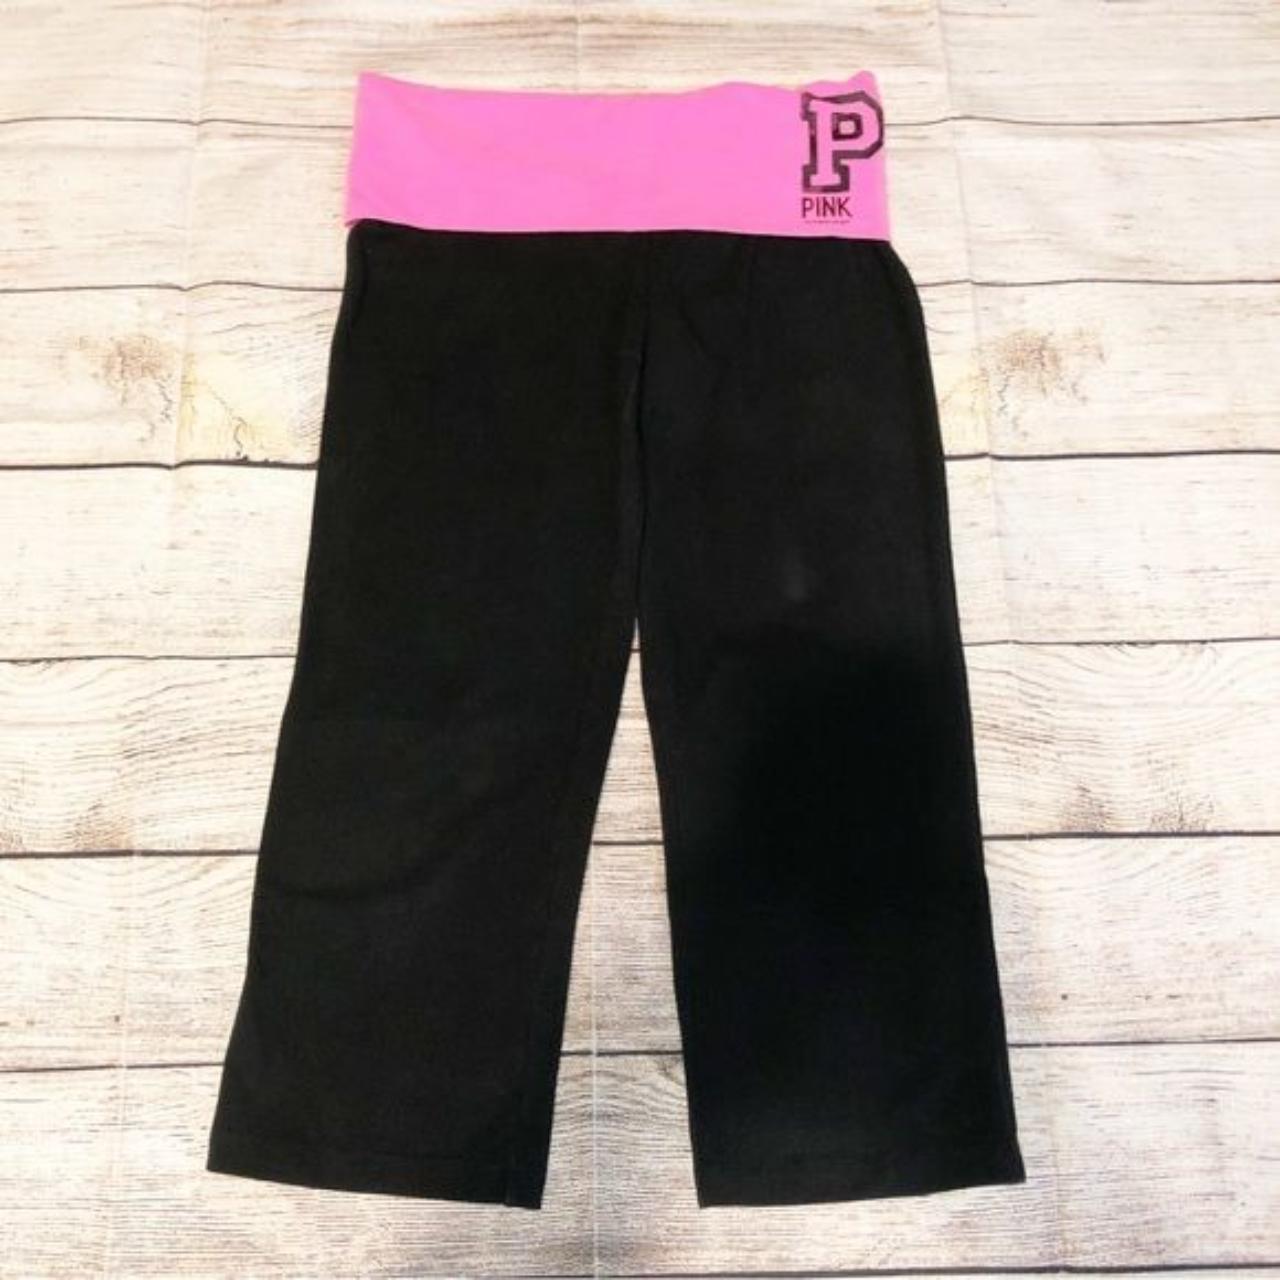 PINK by Victoria Secret Yoga Pants Size XS Black and - Depop